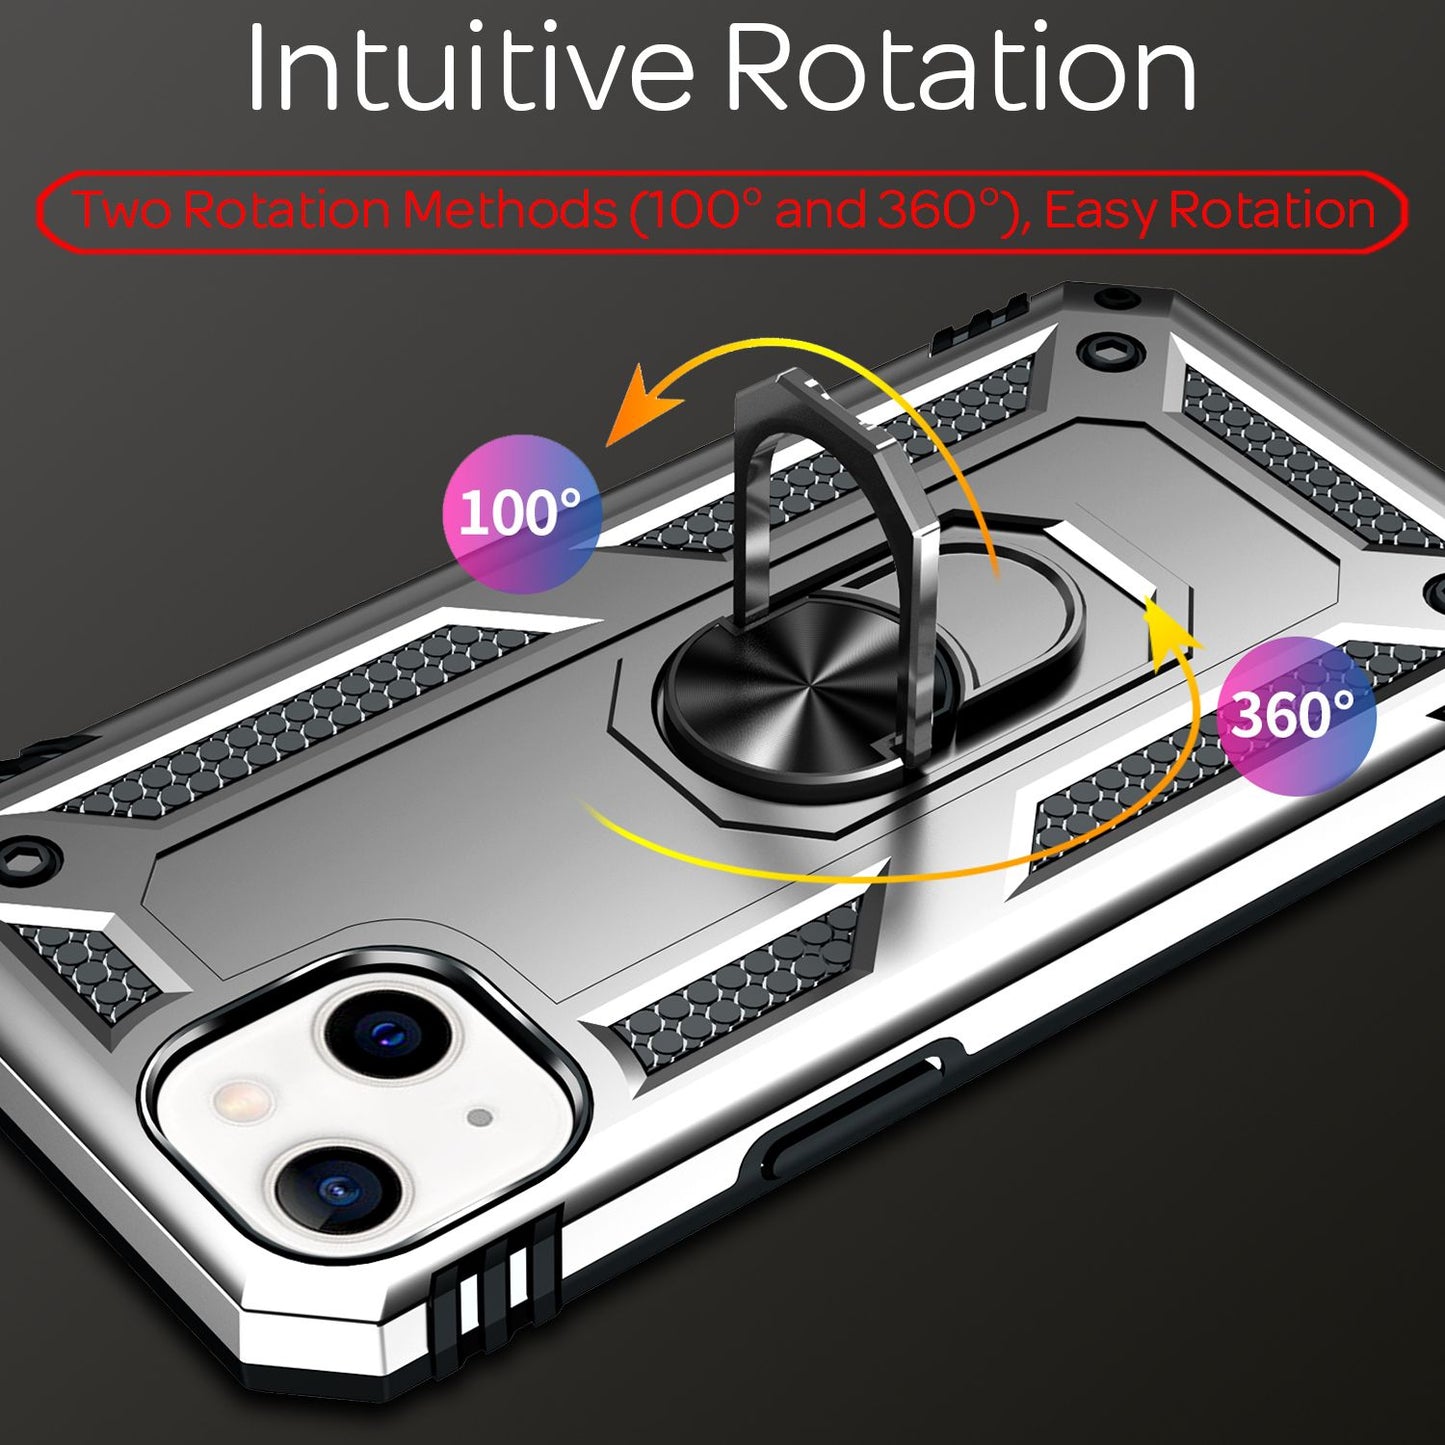 NALIA Ring Hülle für iPhone 13 Mini, Hard Case mit Silikon Bumper Cover Schutz